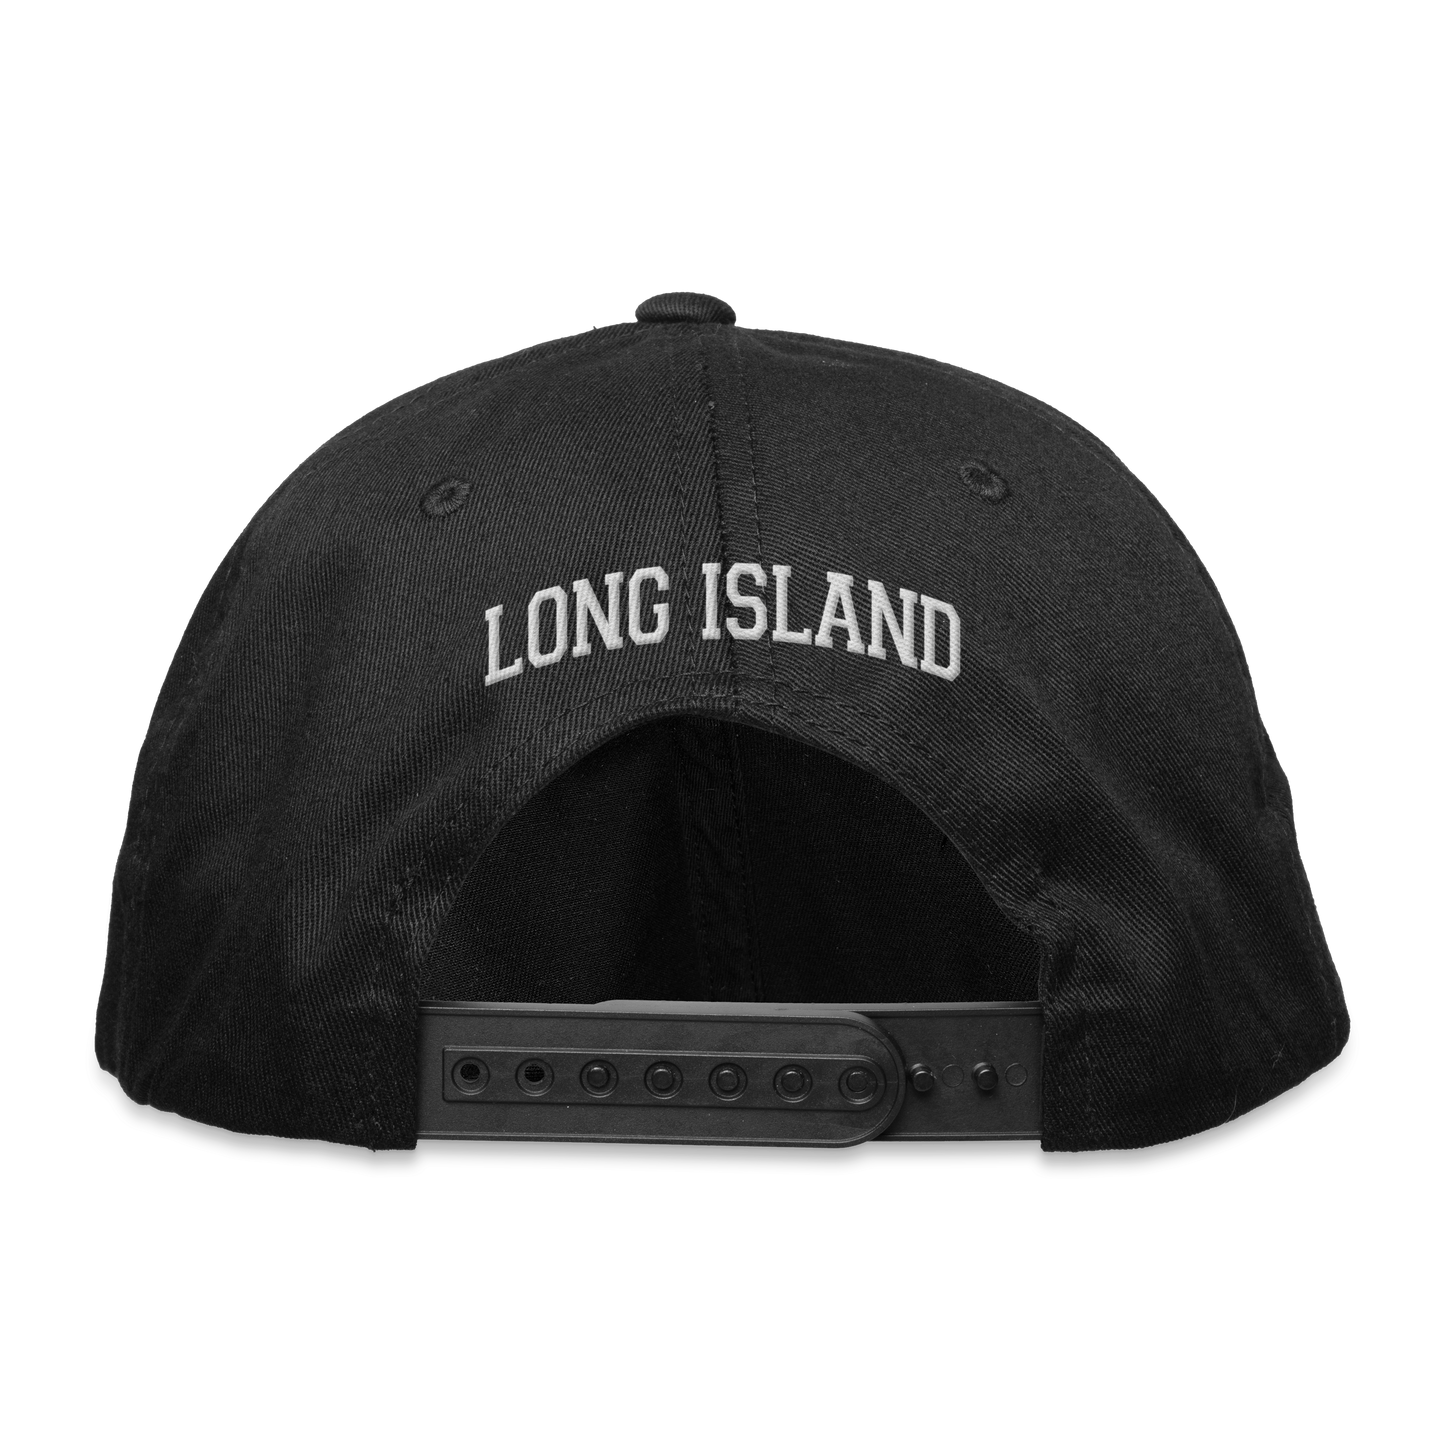 Stand Still - Snapback Hat (Pre-Order)